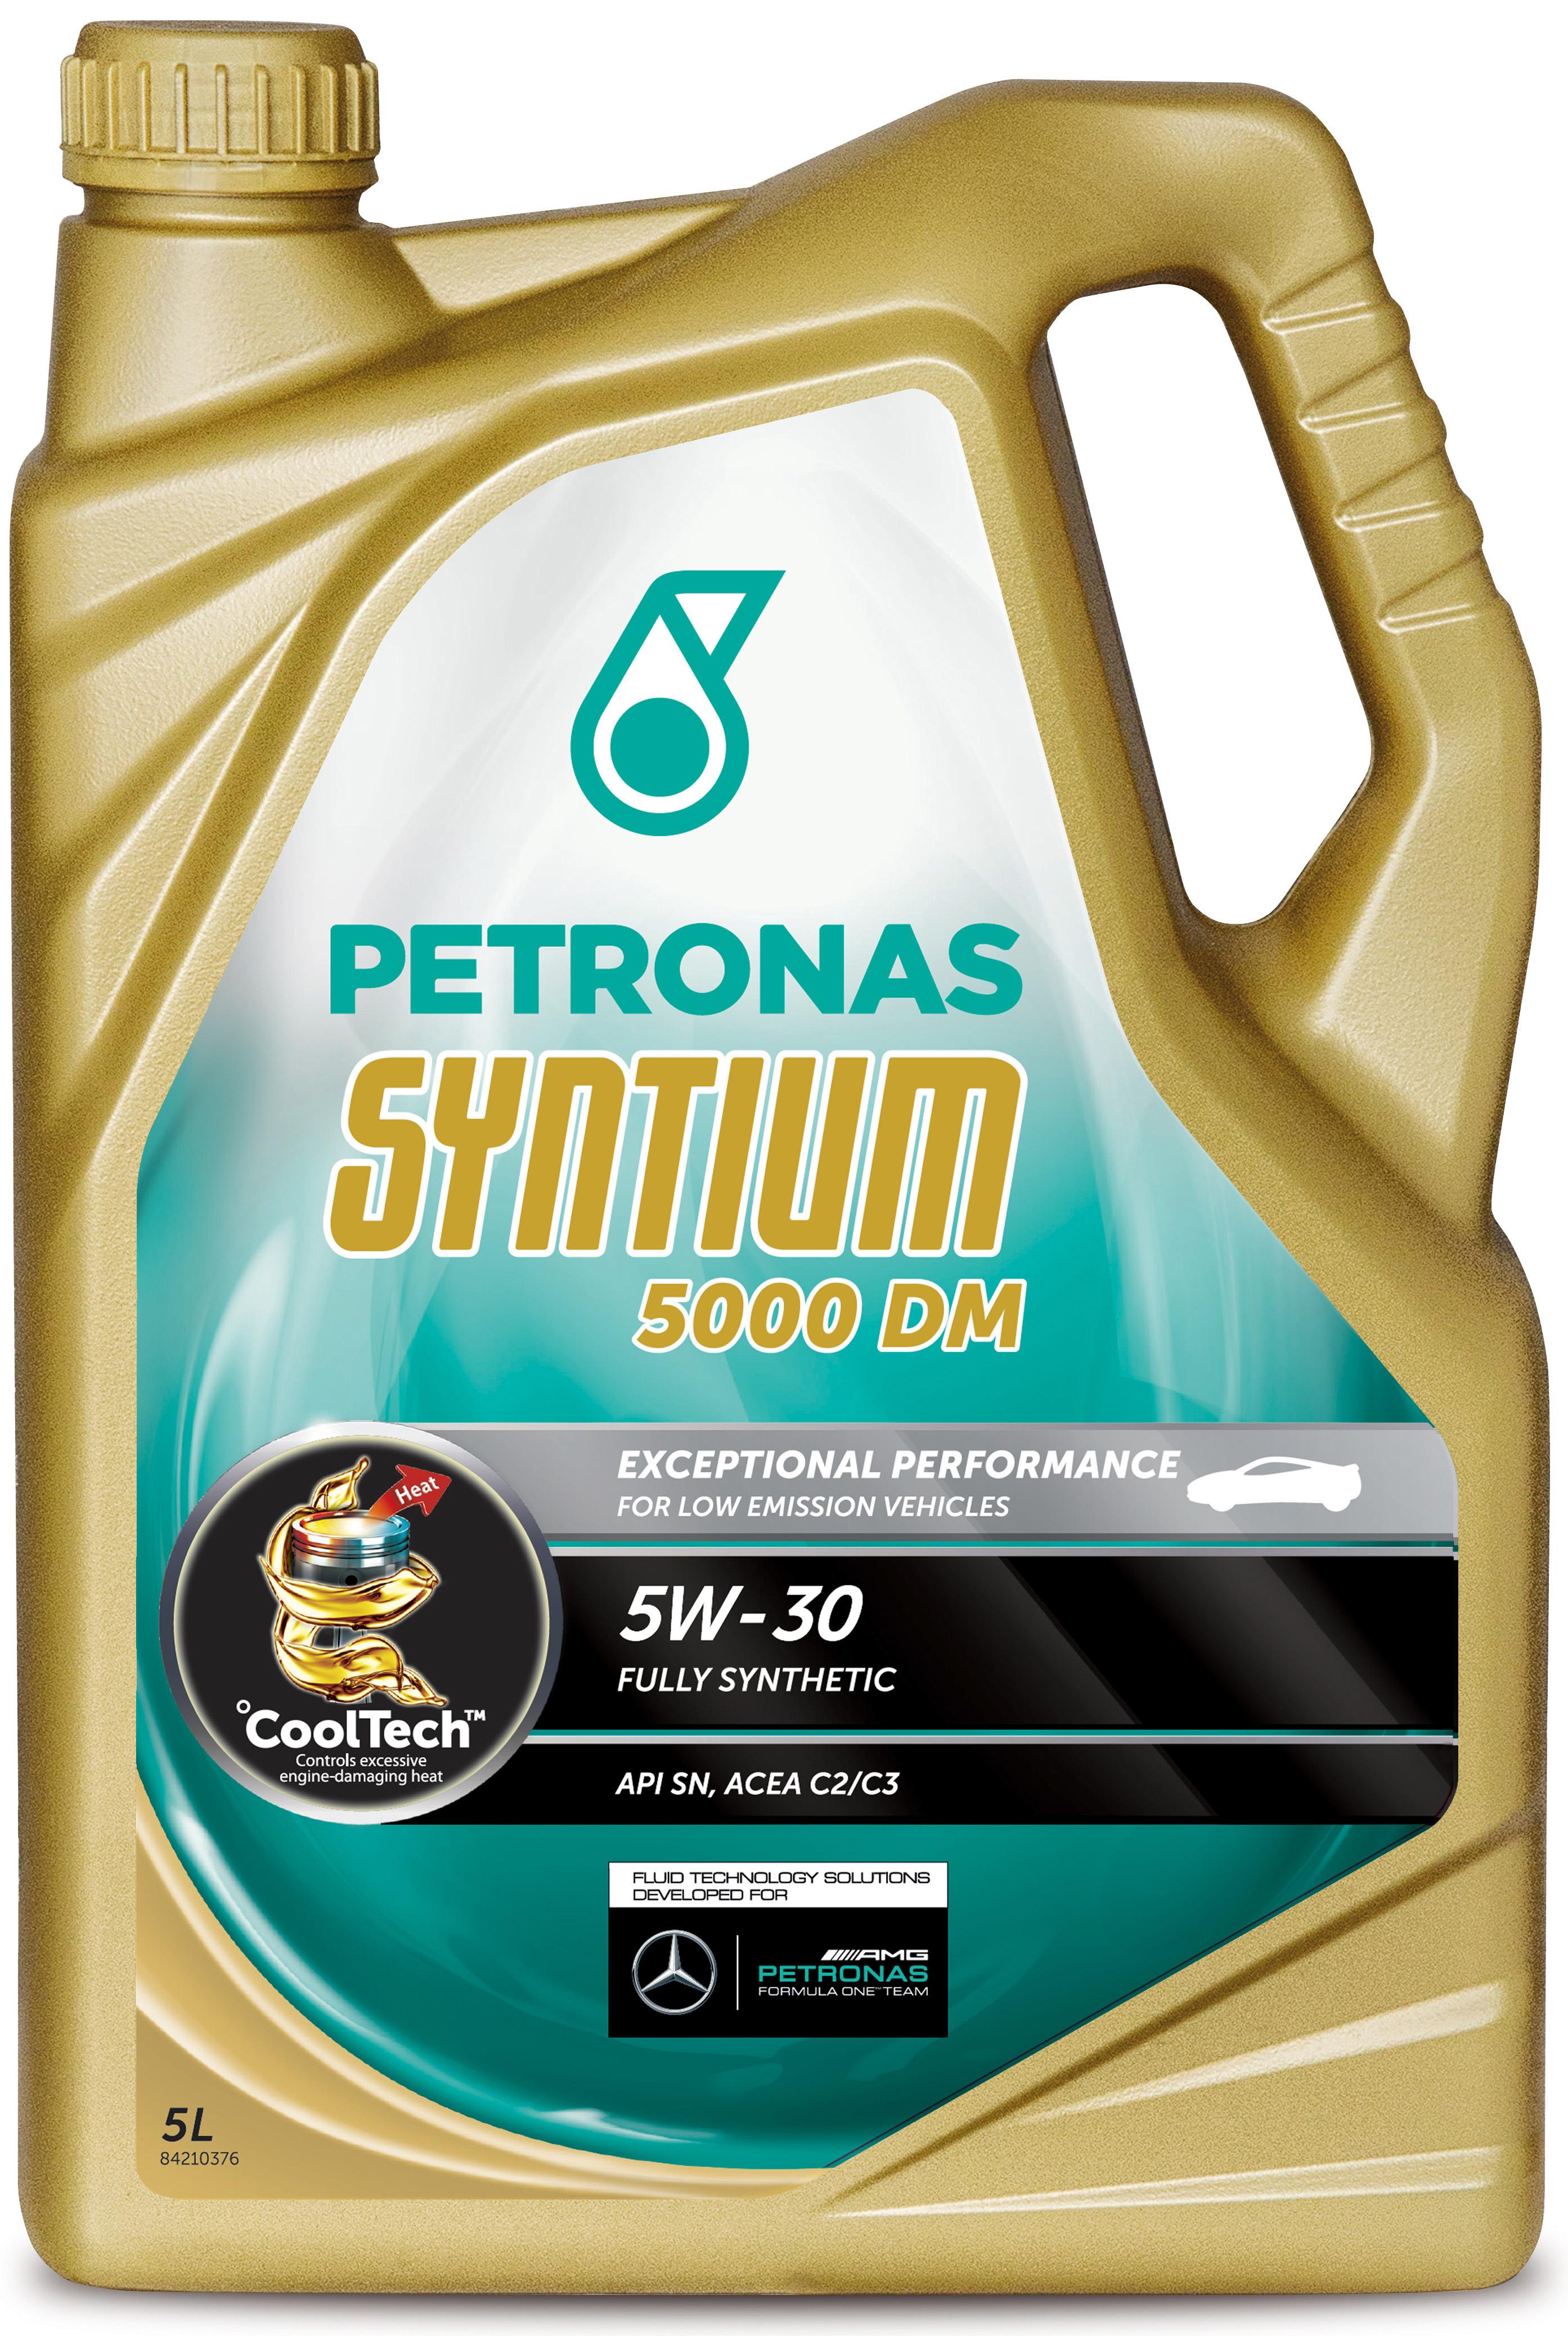 Petronas Syntium 5000 Dm 5W-30 Oil 5L